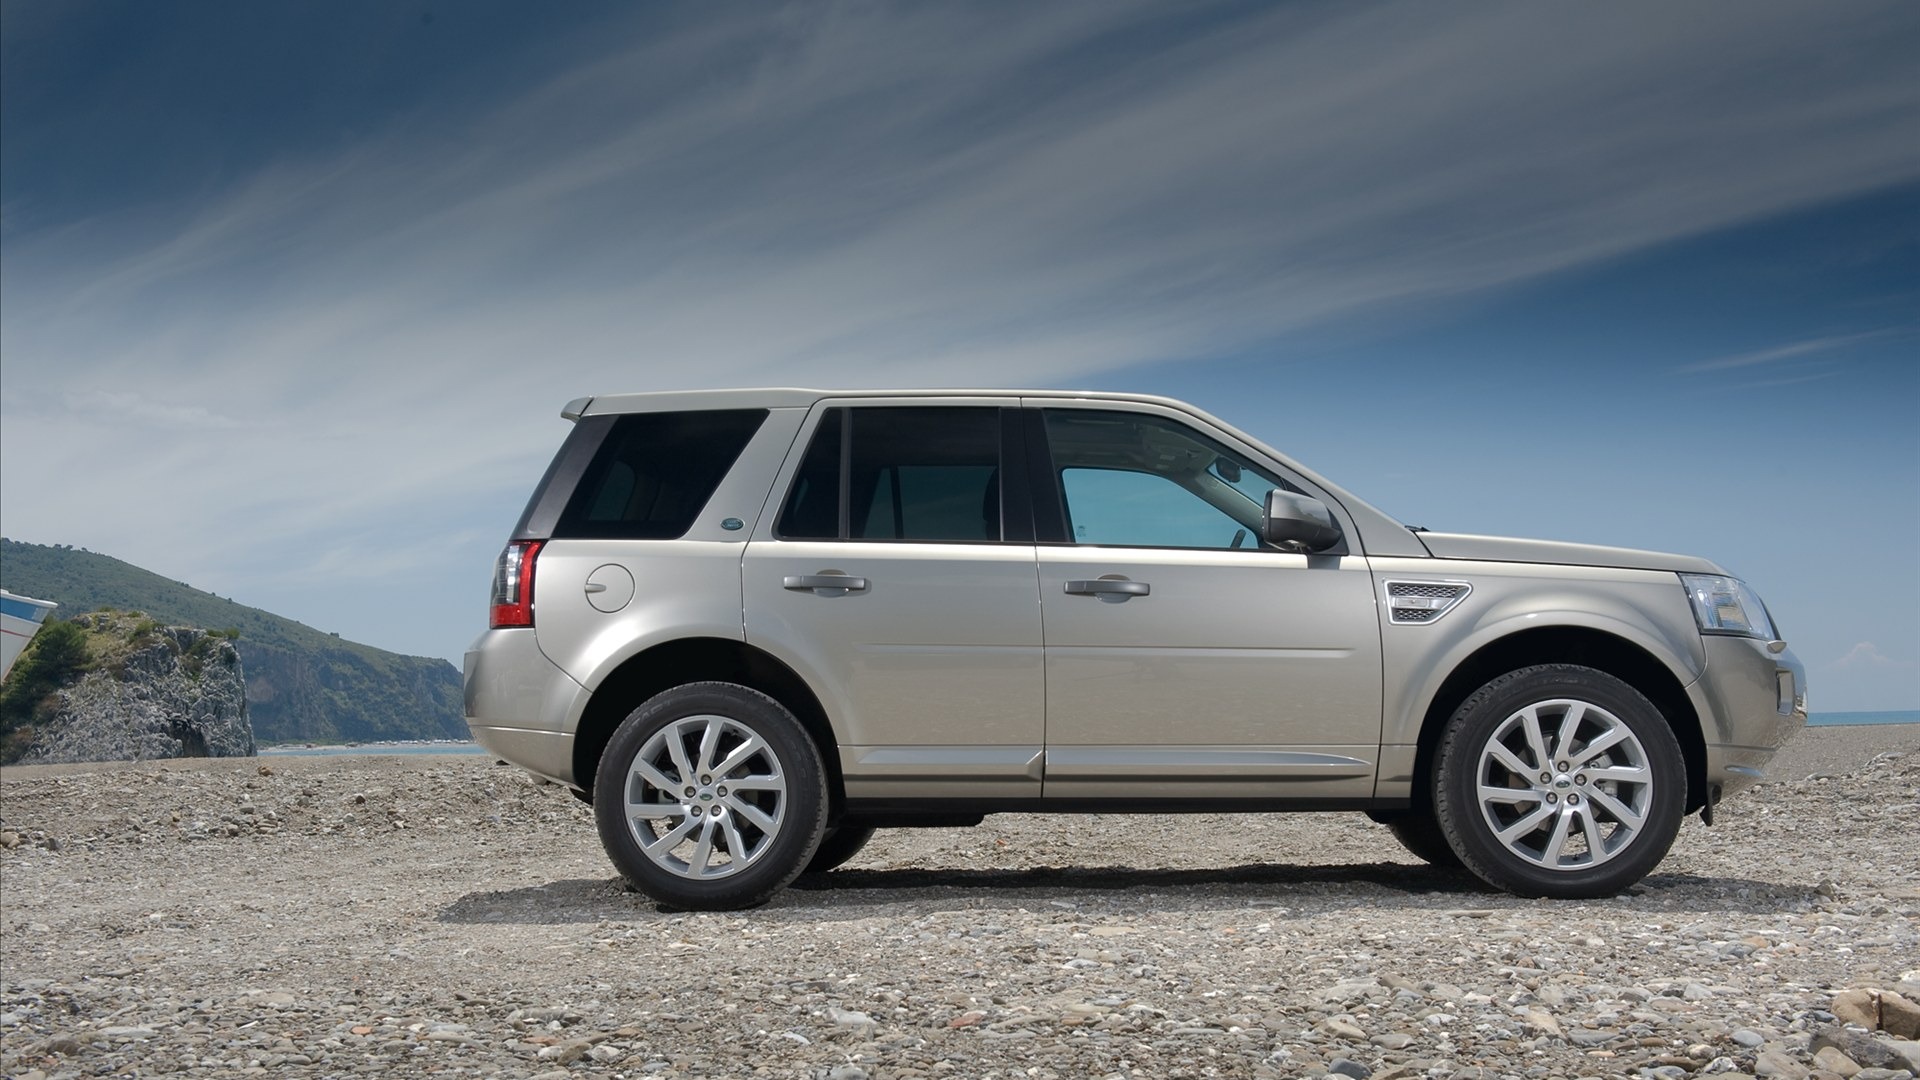 Land Rover fonds d'écran 2011 (1) #8 - 1920x1080